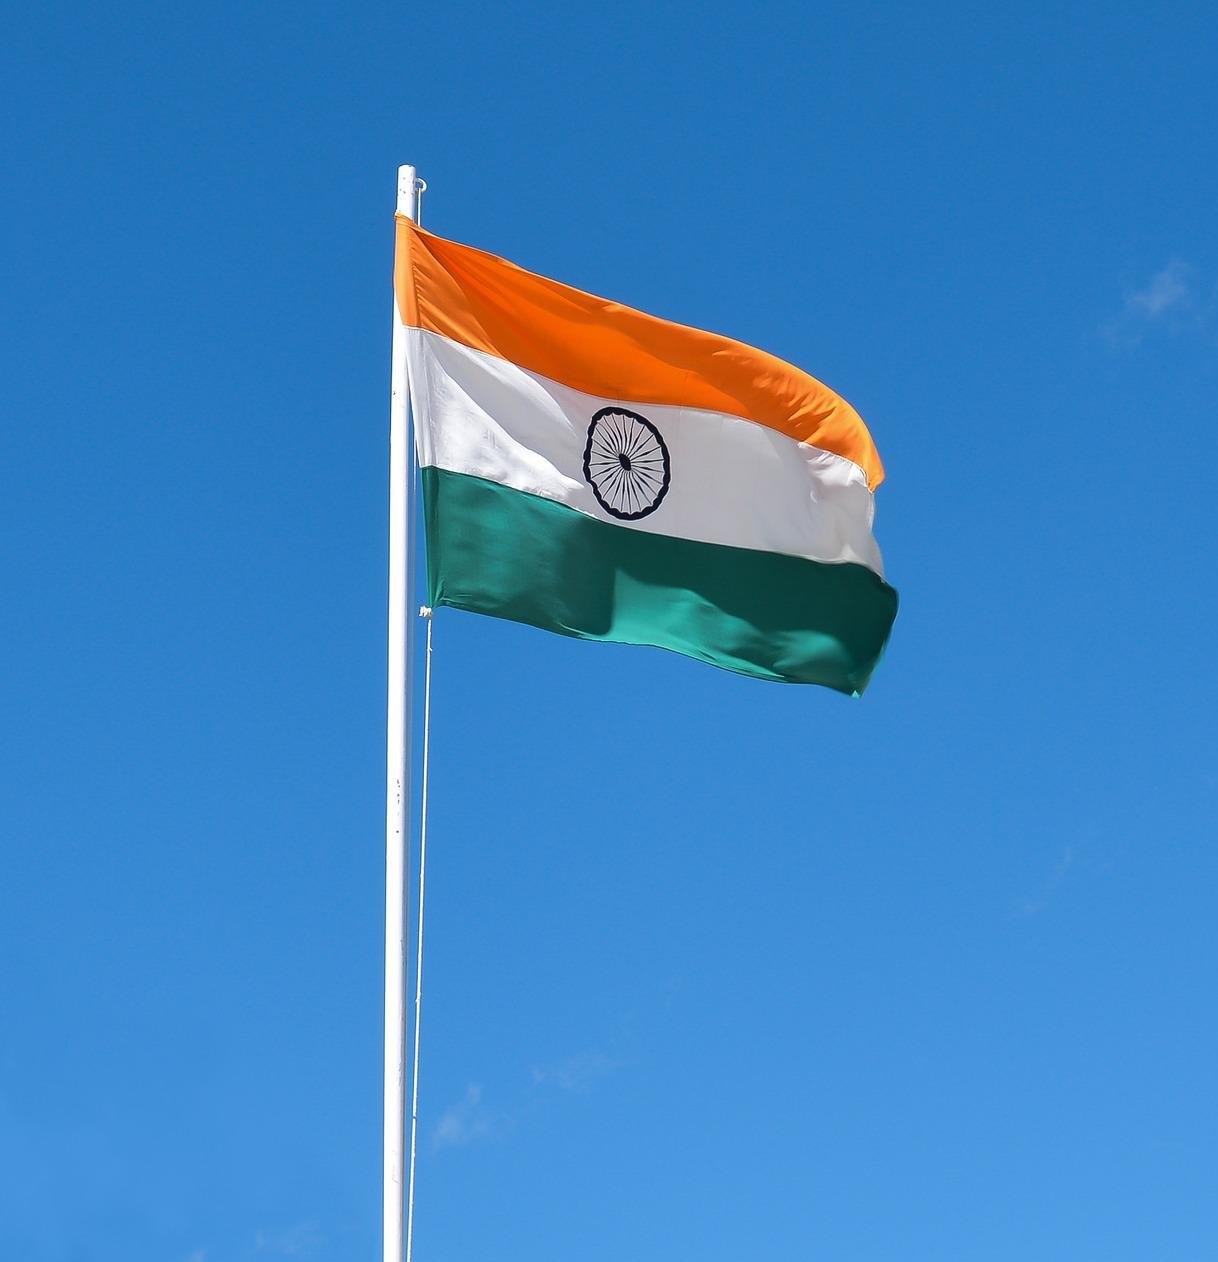 Buy Tricolour Indian Flag Online from epostoffice Portal